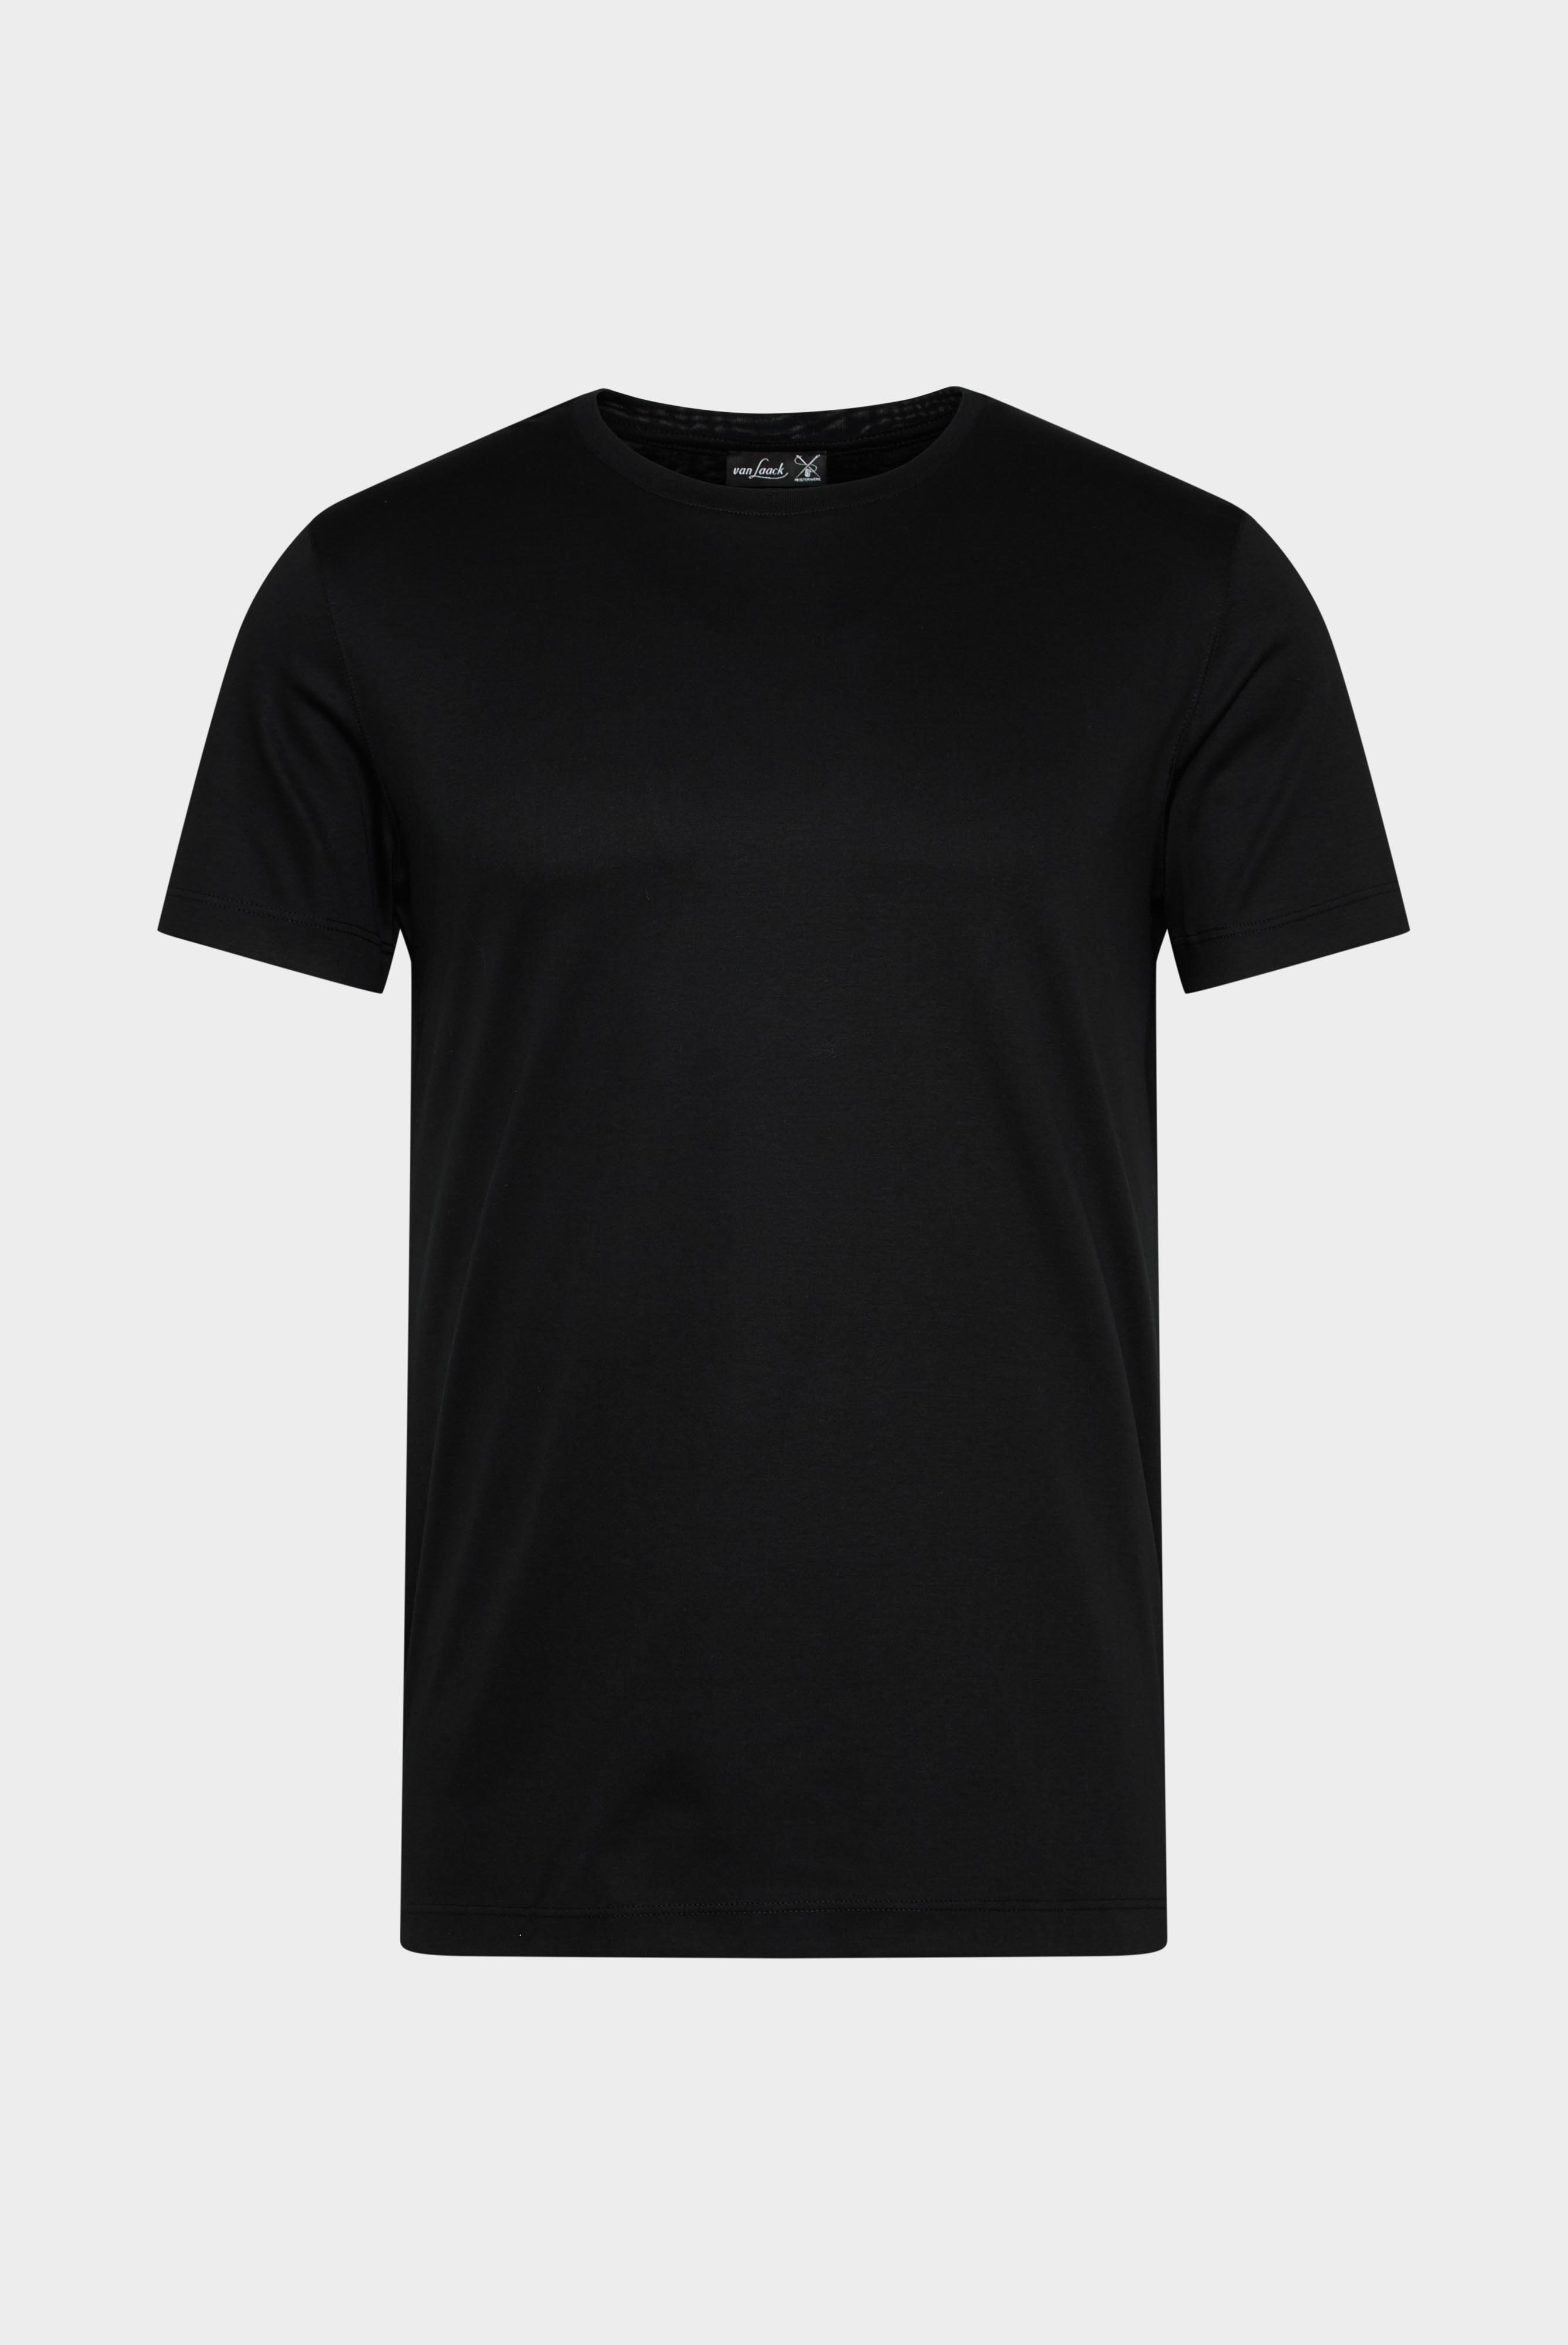 T-Shirts+Swiss Cotton Jersey Crew Neck T-Shirt+20.1717.UX.180031.099.M